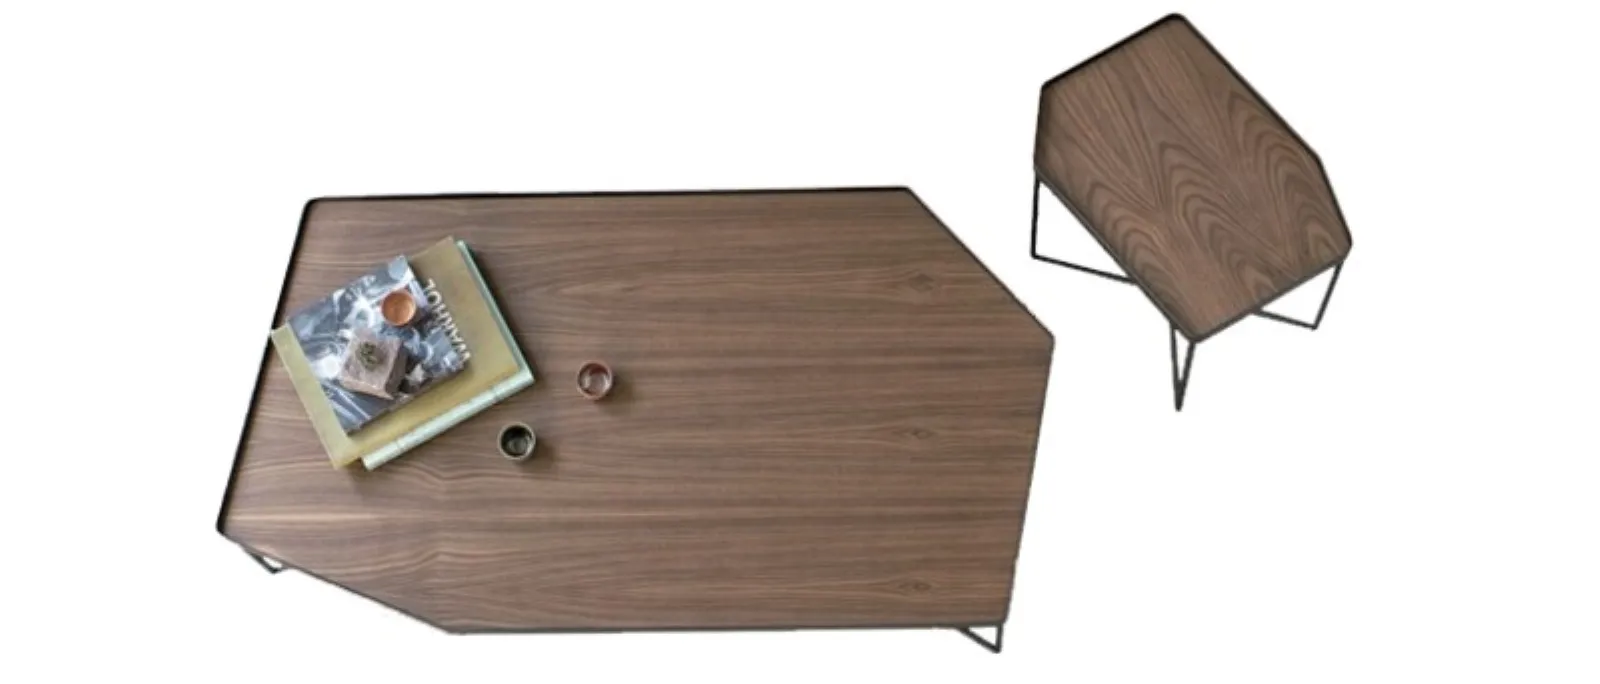 shaped Kirk coffee table